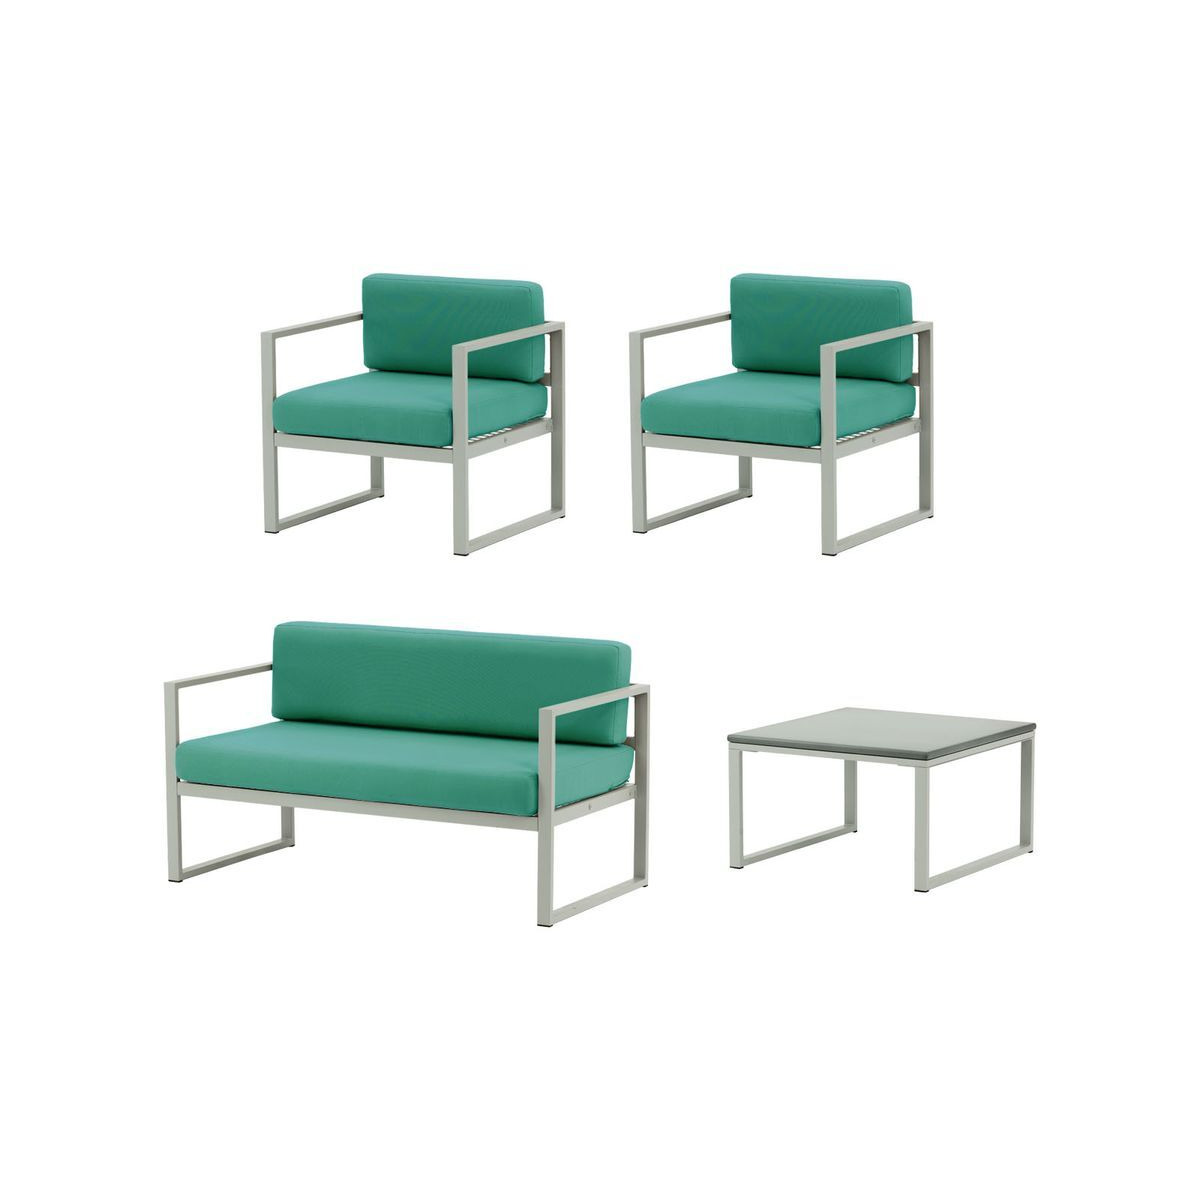 Sunset 4-piece garden furniture set A, turquoise, Leg colour: grey steel